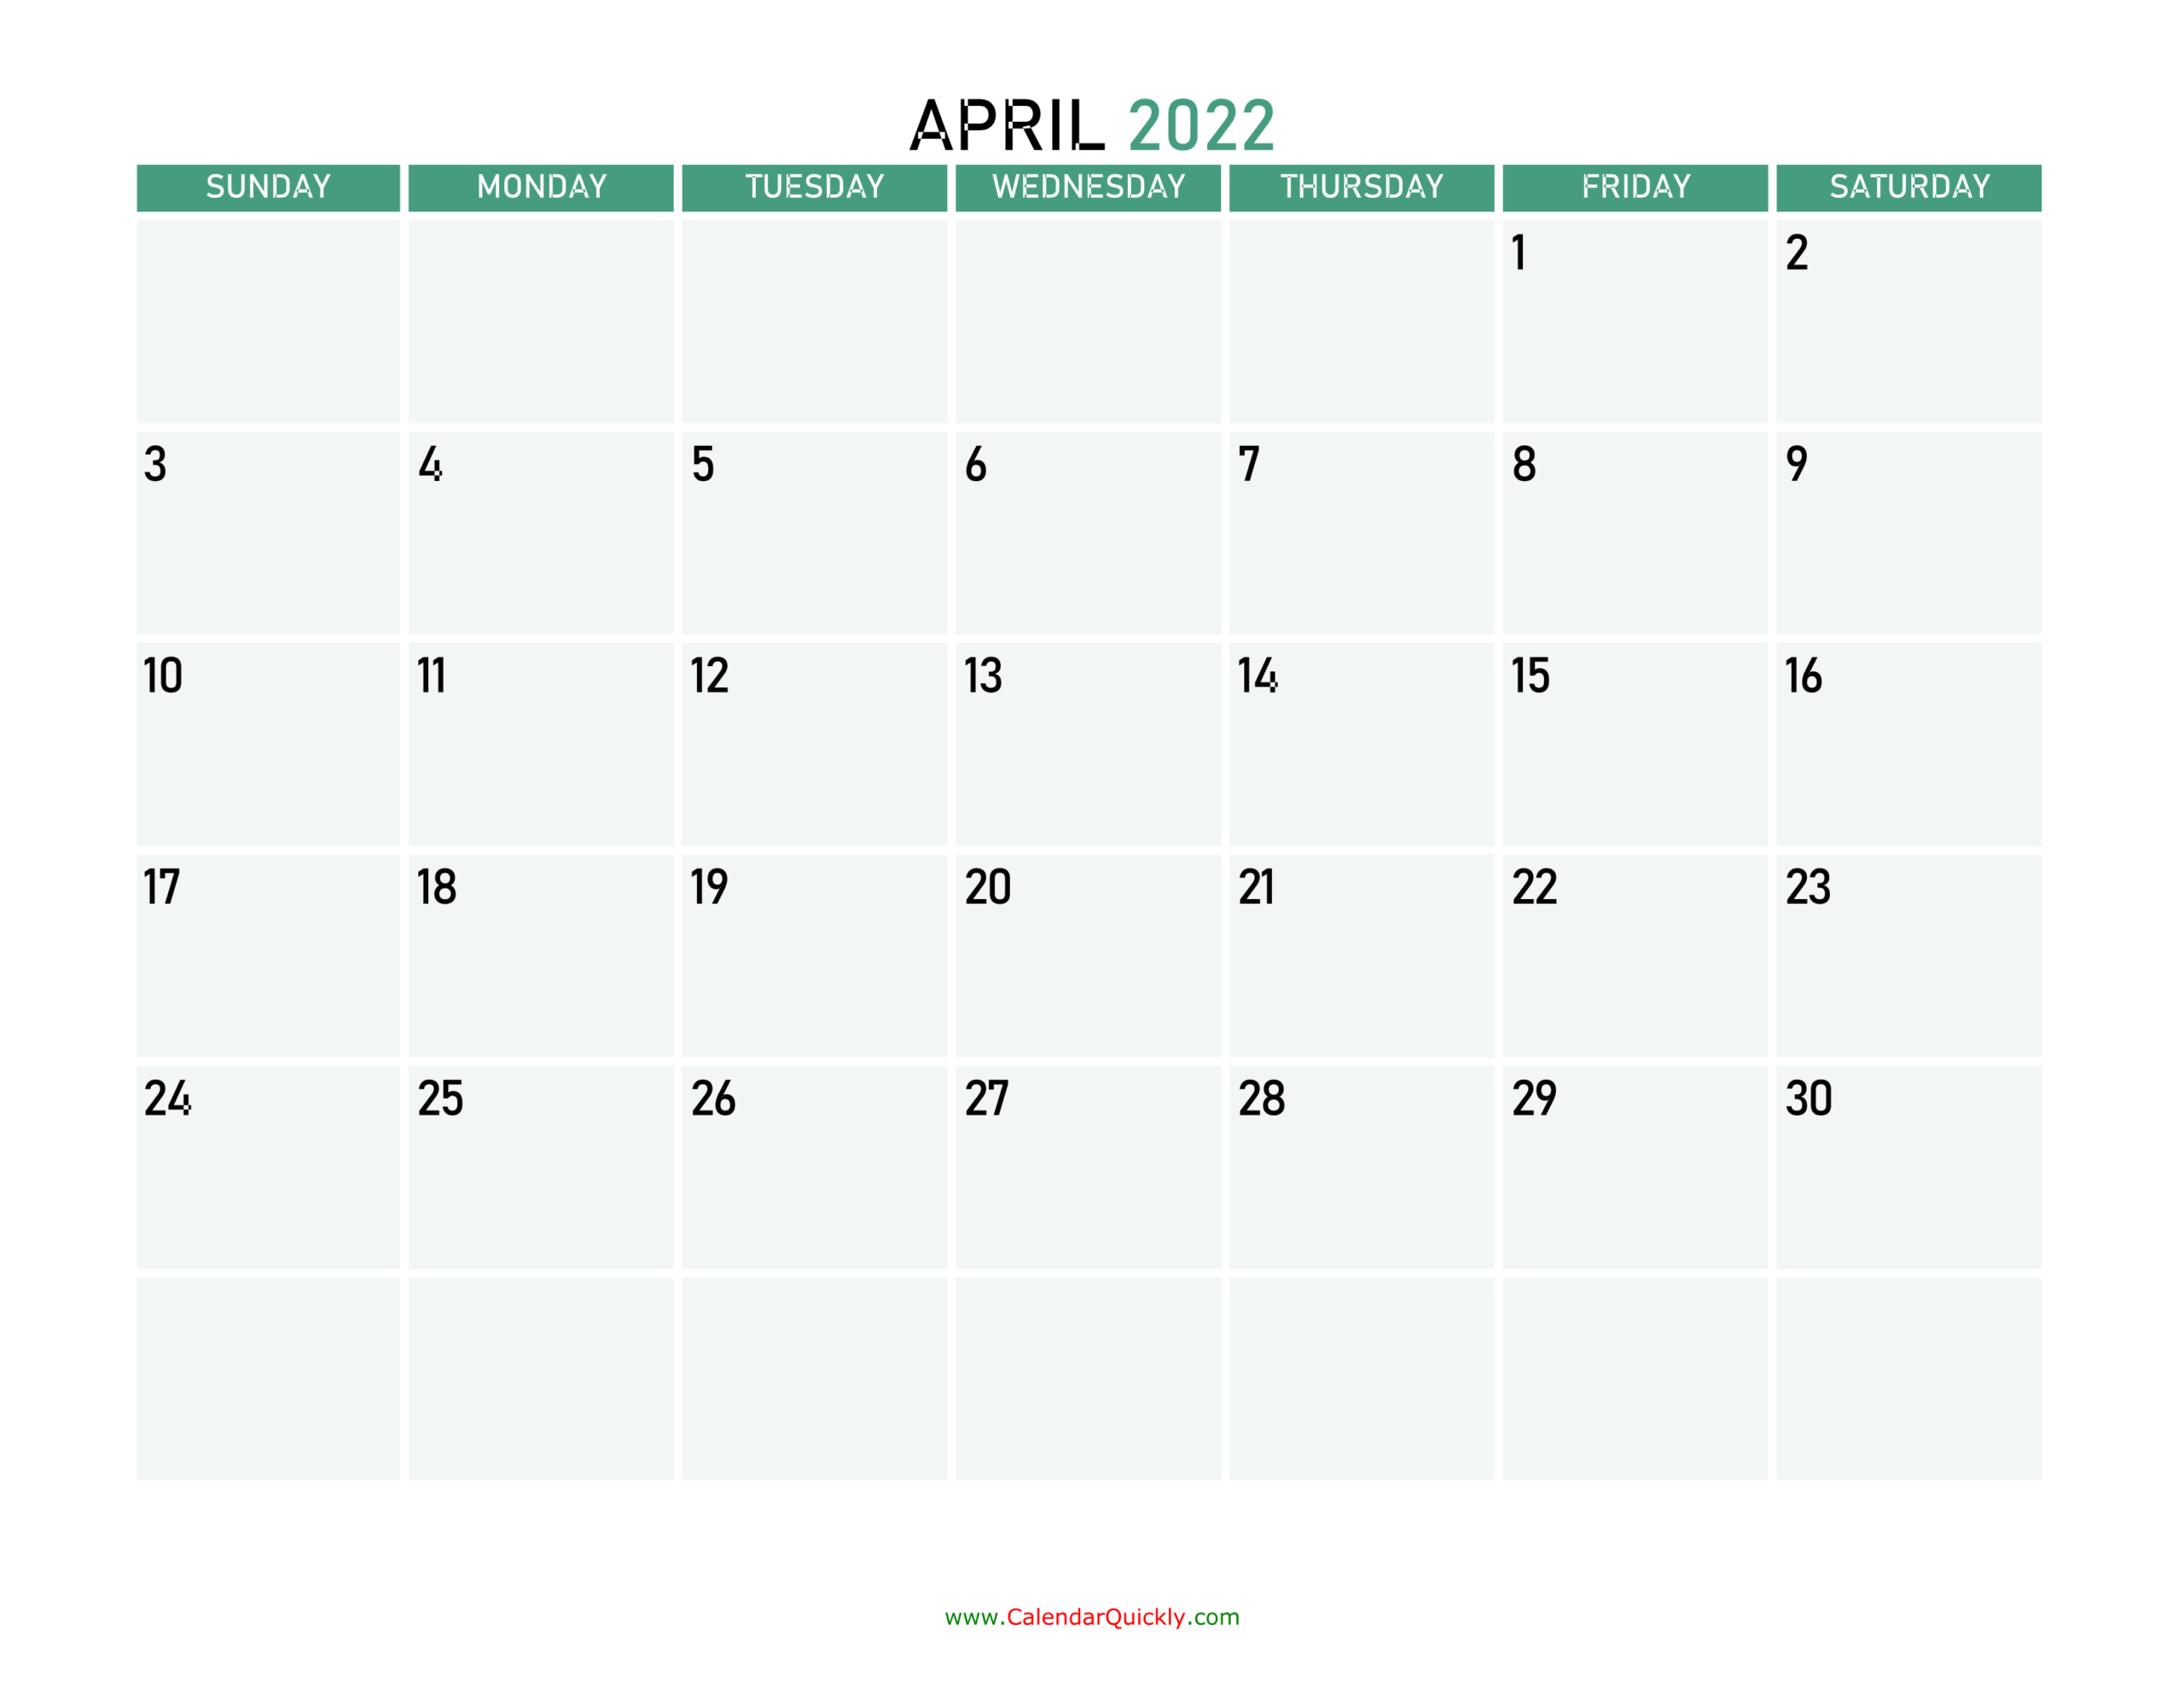 April 2022 Calendars | Calendar Quickly  Printable Calendar 2022 April